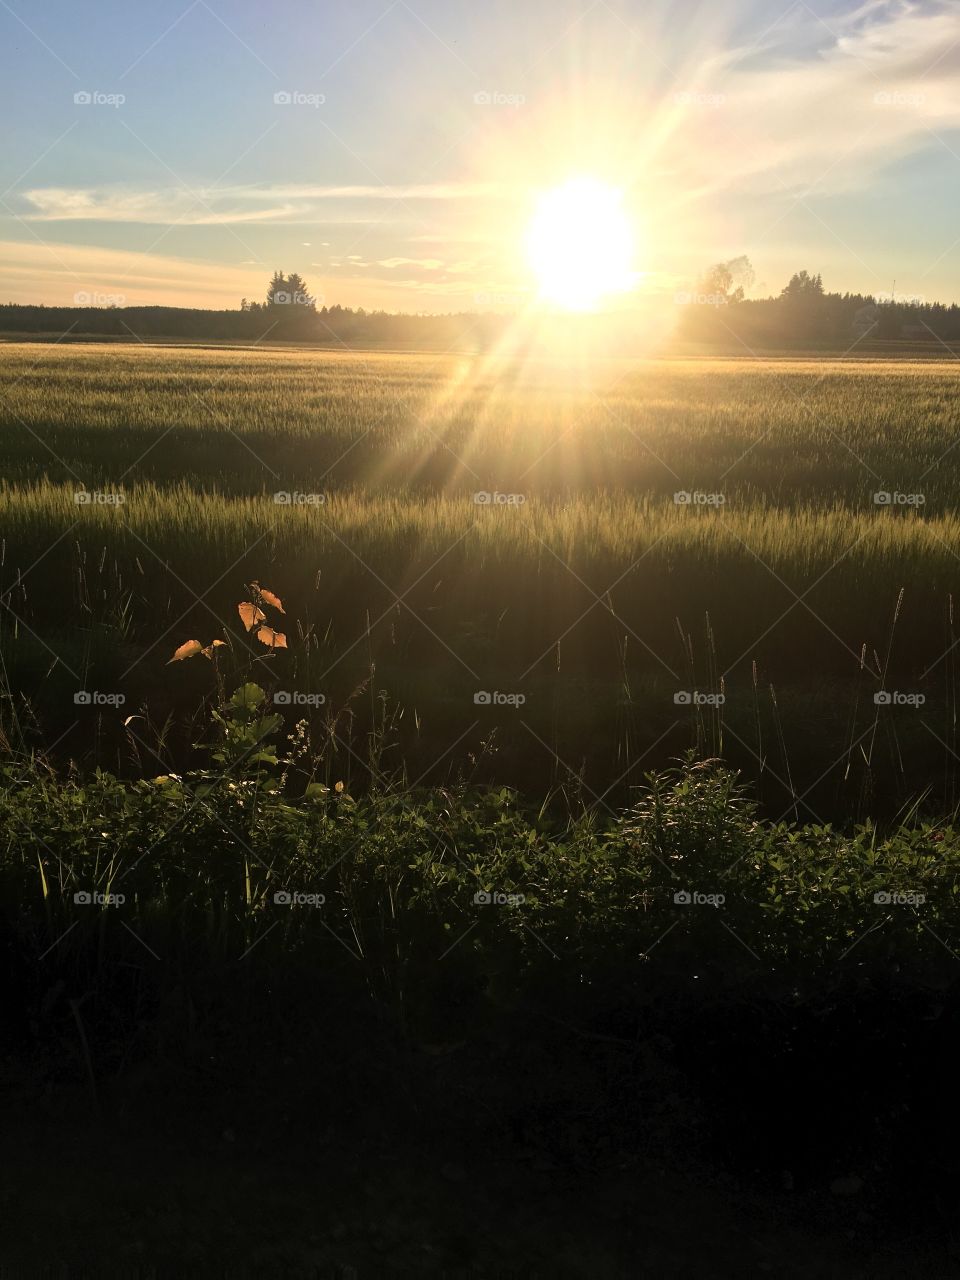 A sunset on a field